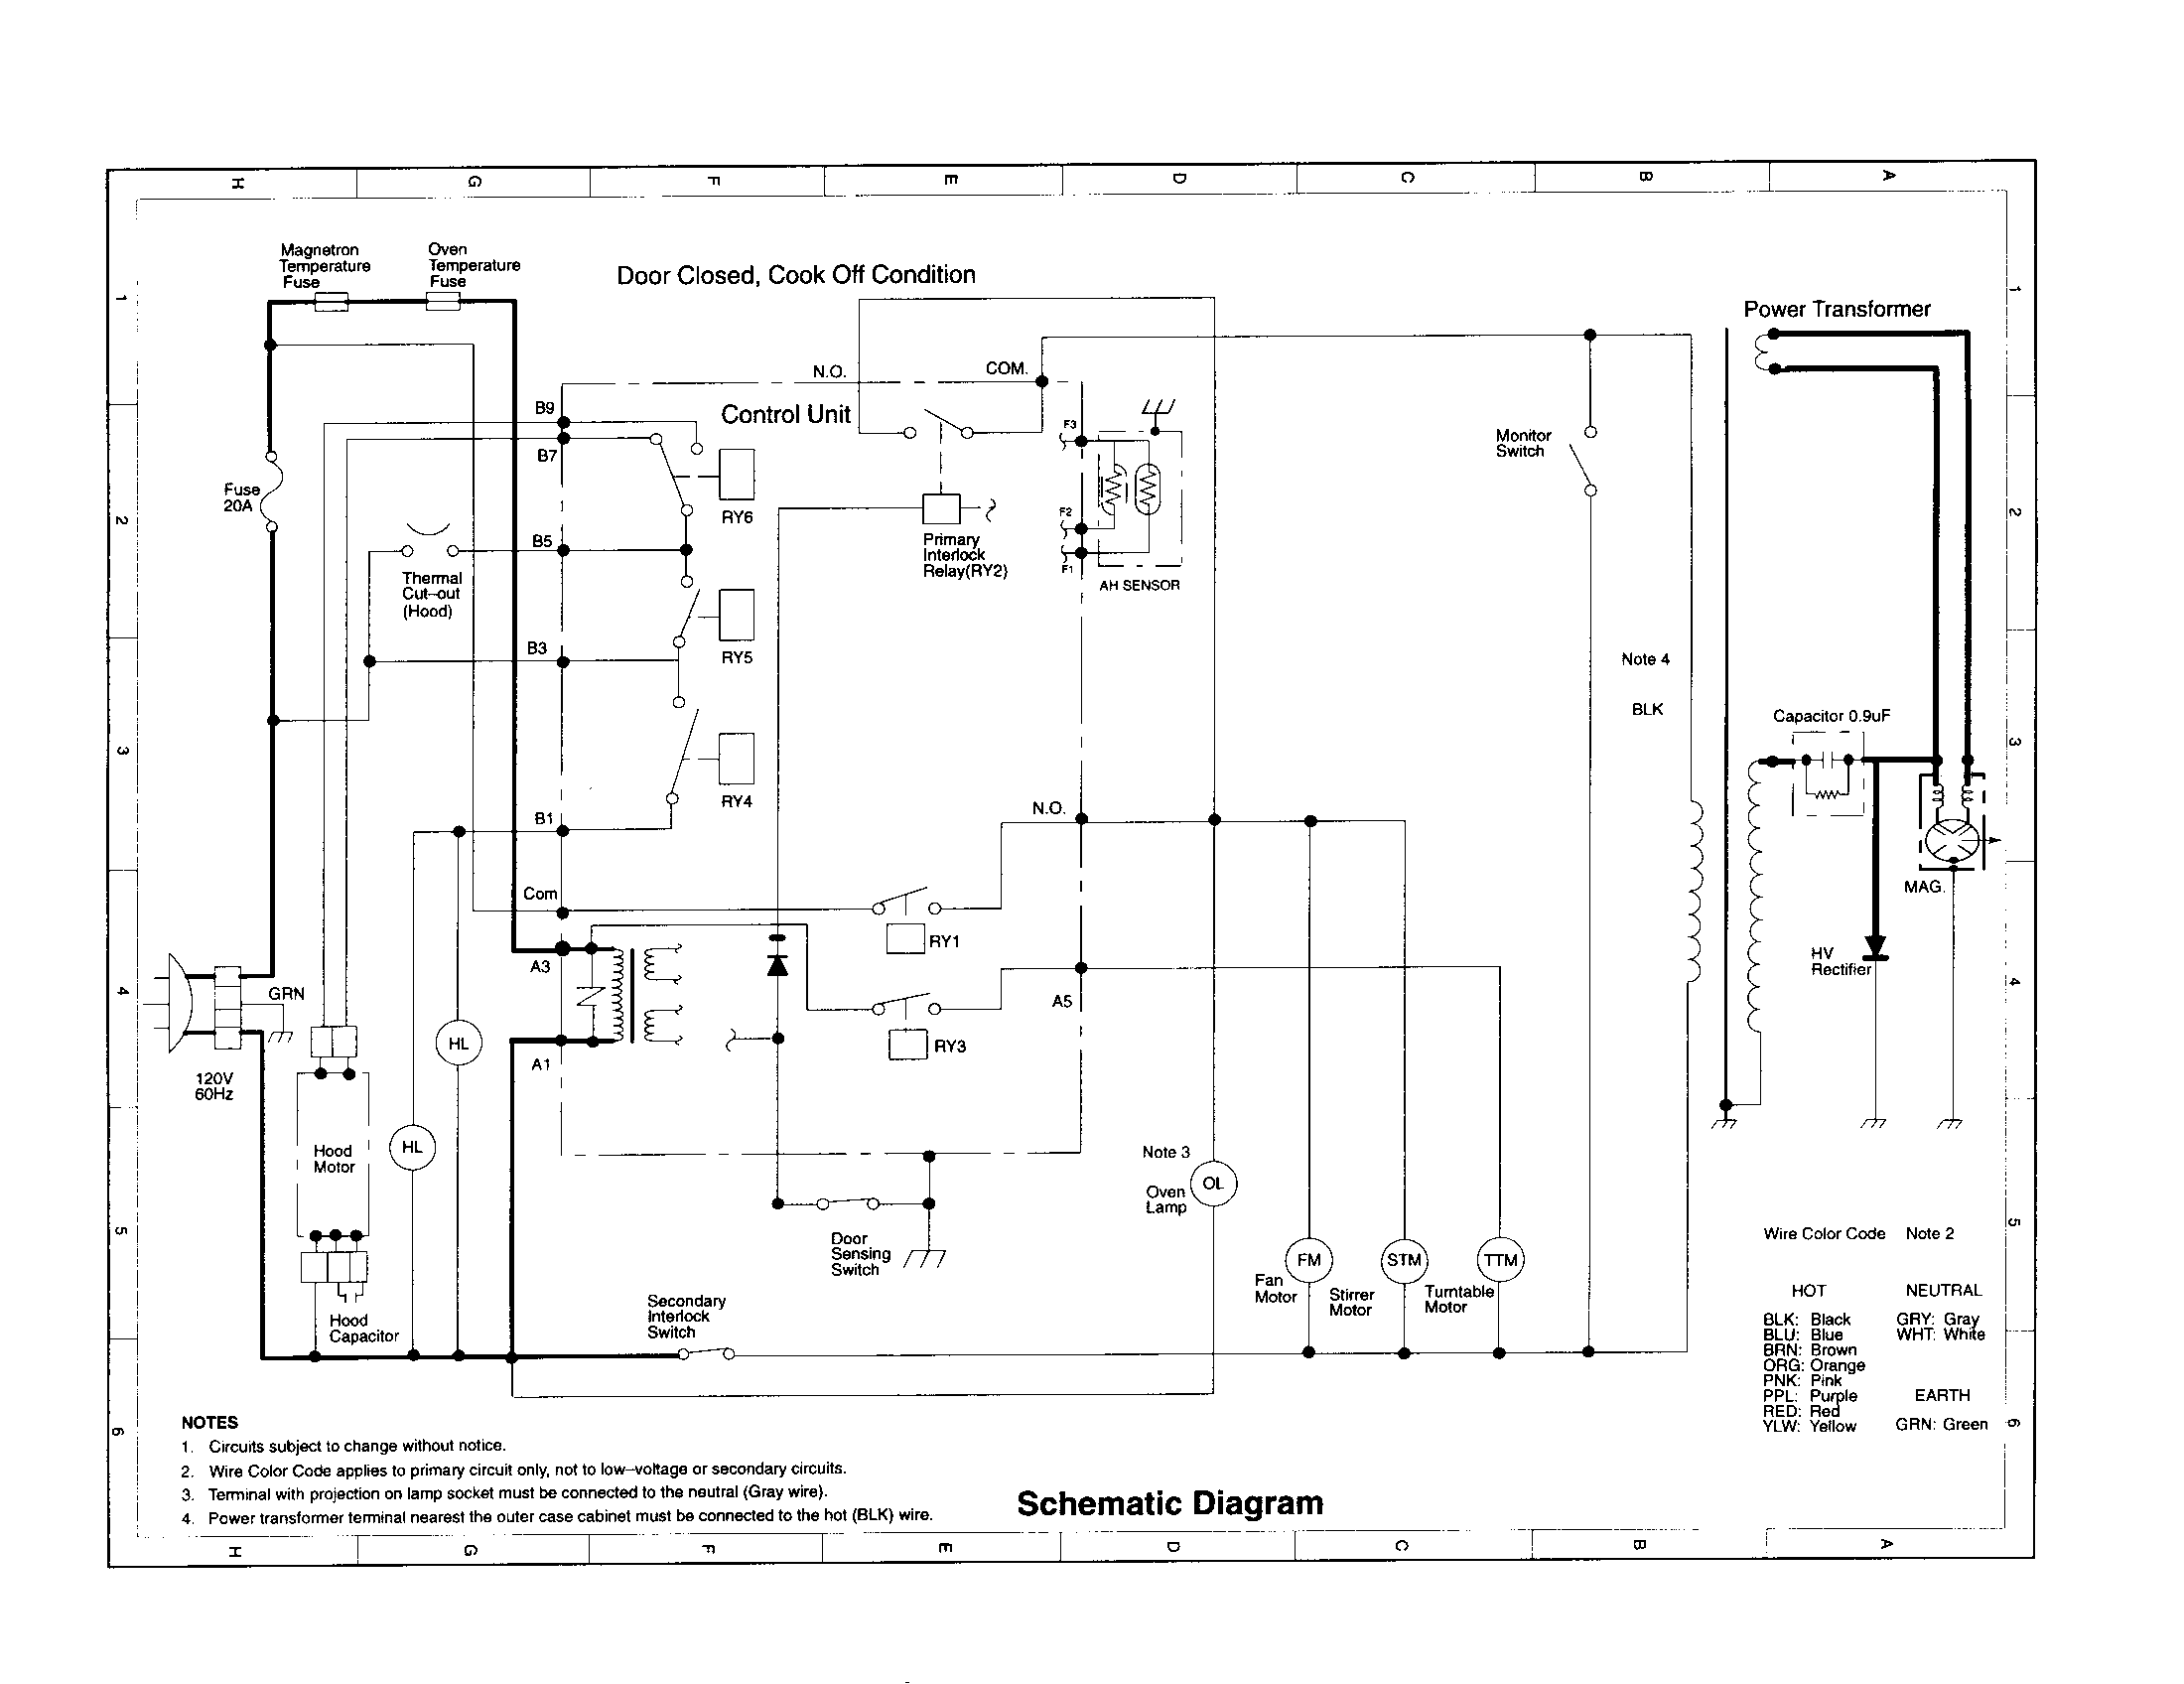 31 Sharp Carousel Microwave Parts Diagram